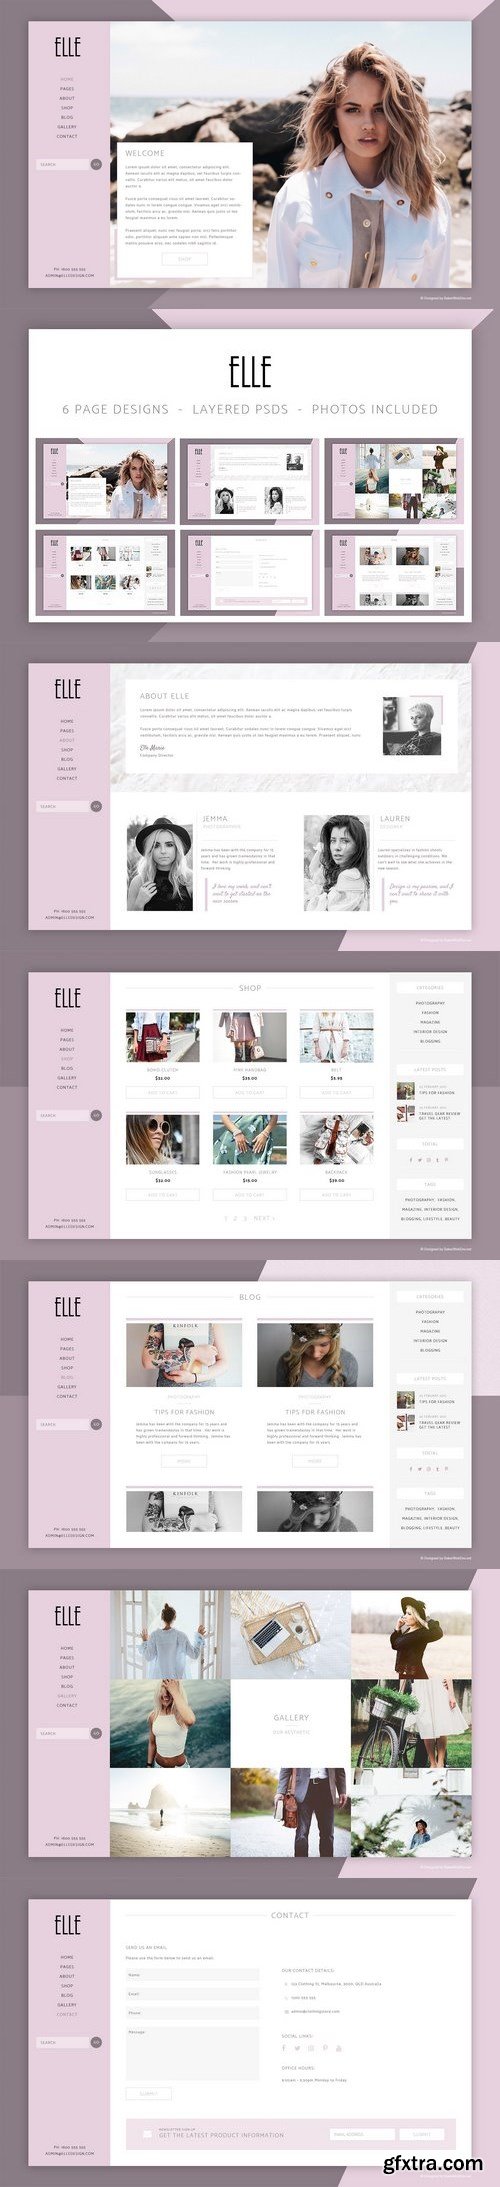 CM - Elle Fashion Shop & Blog Website PSD 1479041